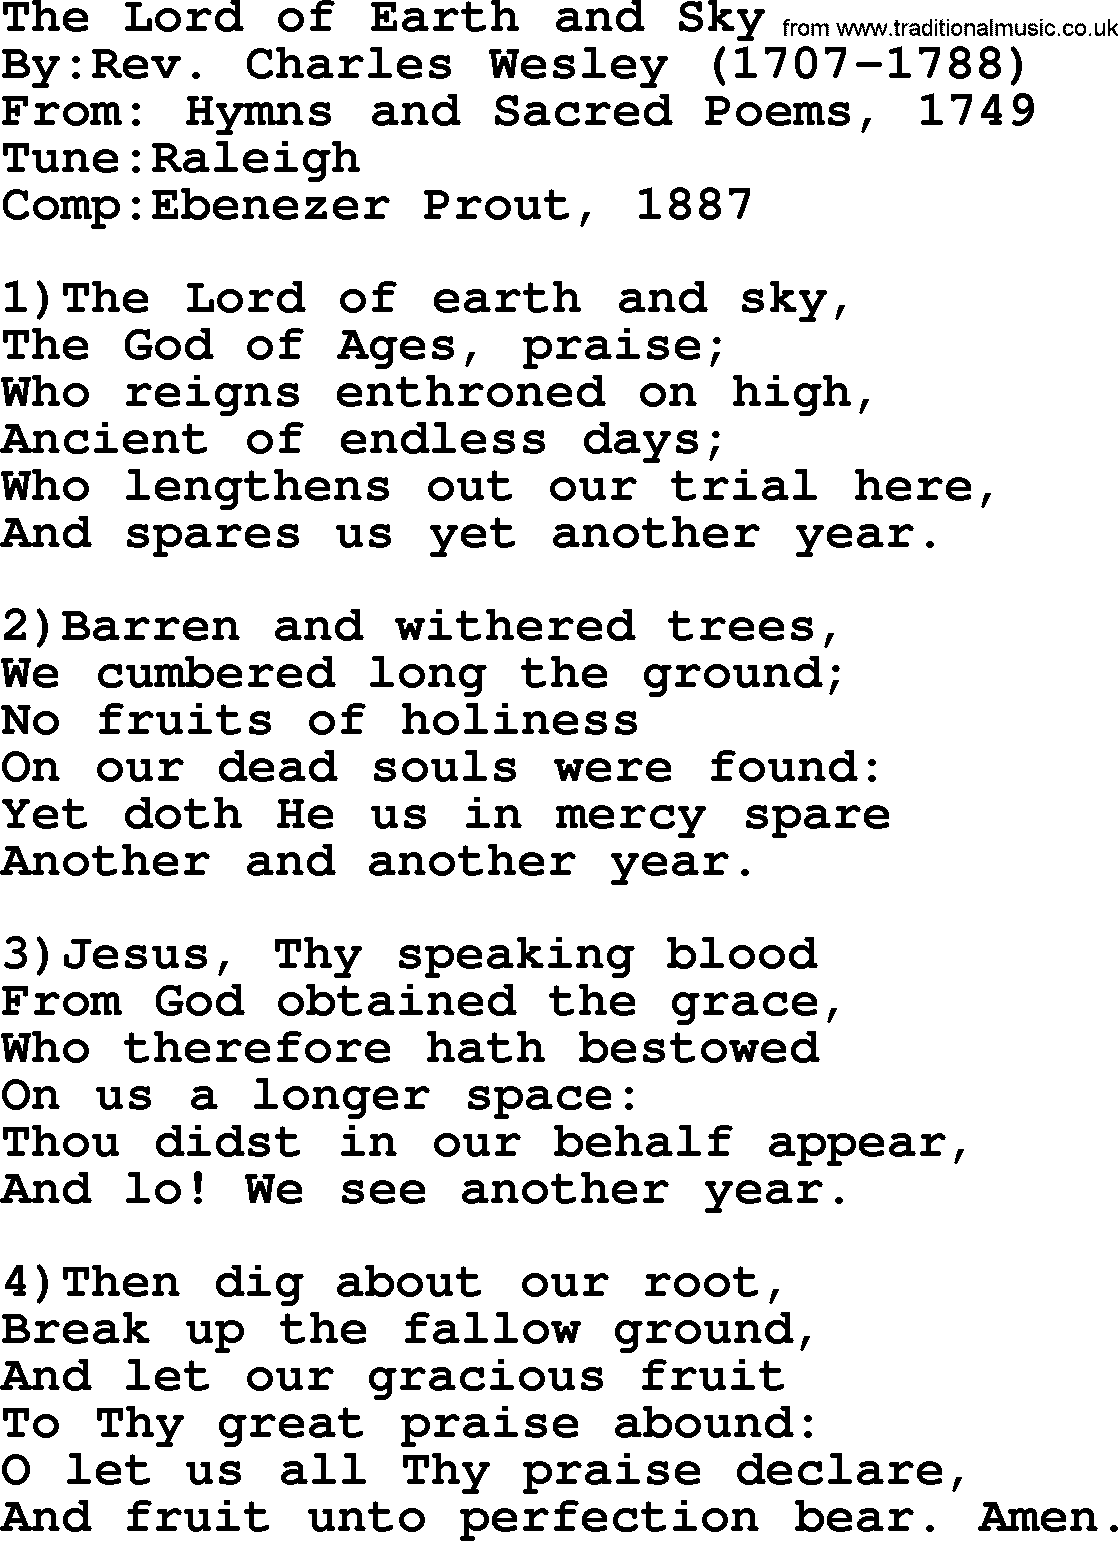 Methodist Hymn: The Lord Of Earth And Sky, lyrics